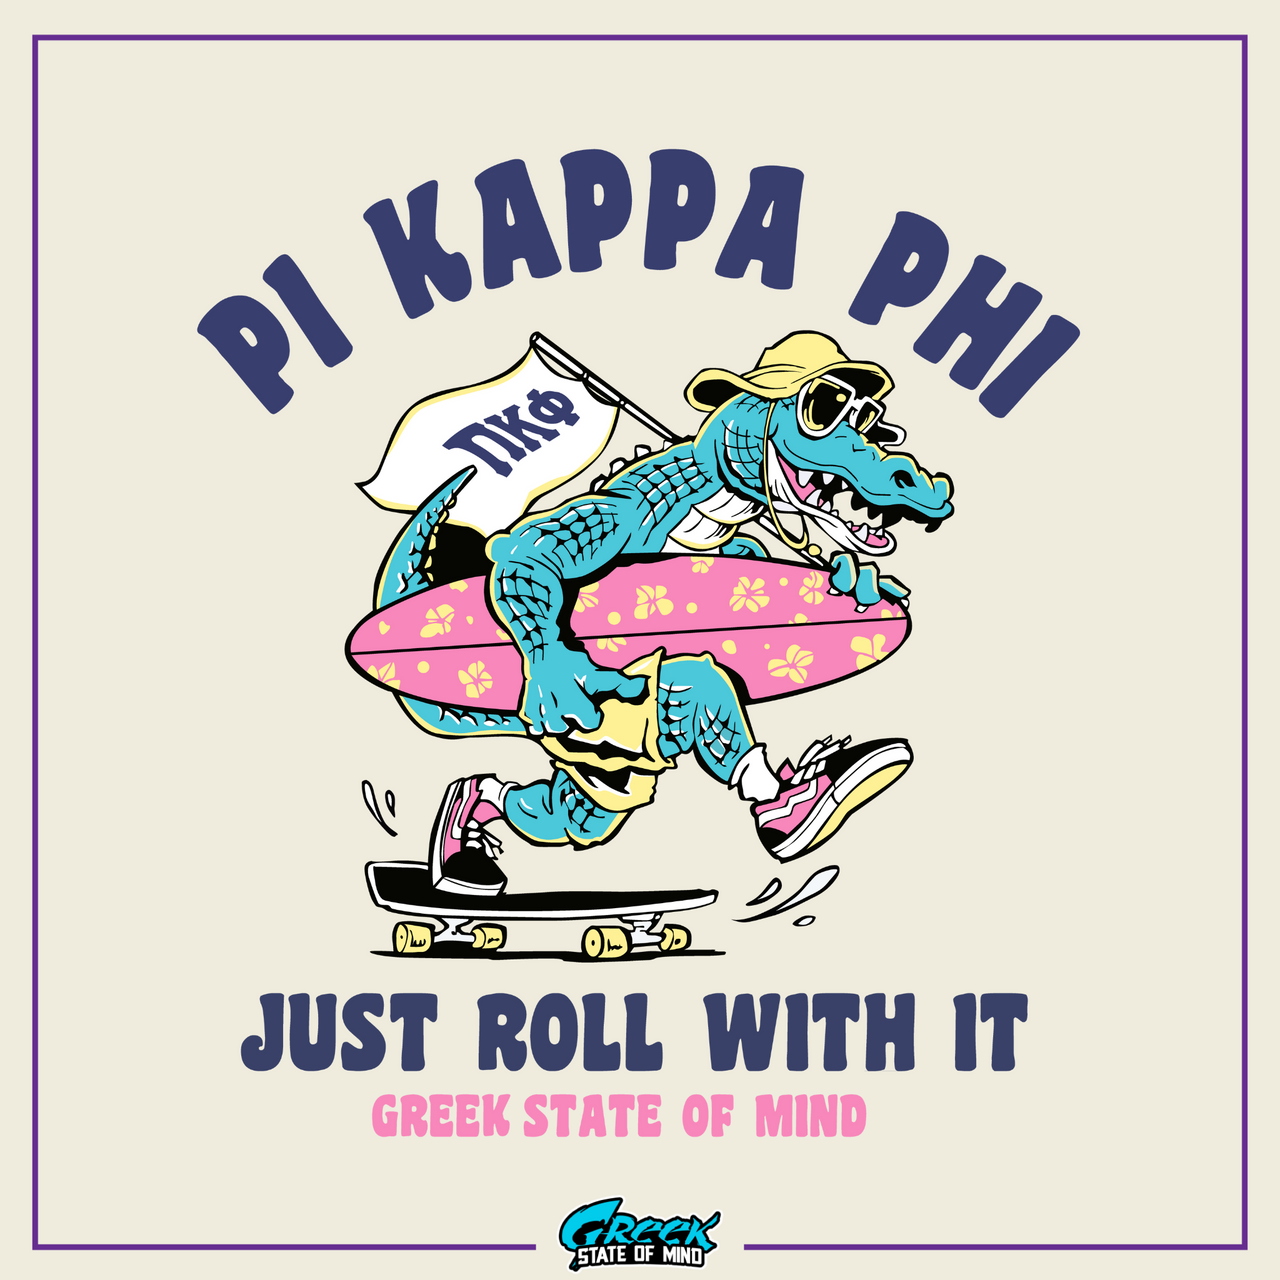 Pi Kappa Phi Graphic T-Shirt | Alligator Skater | Pi kappa alpha fraternity shirt design 